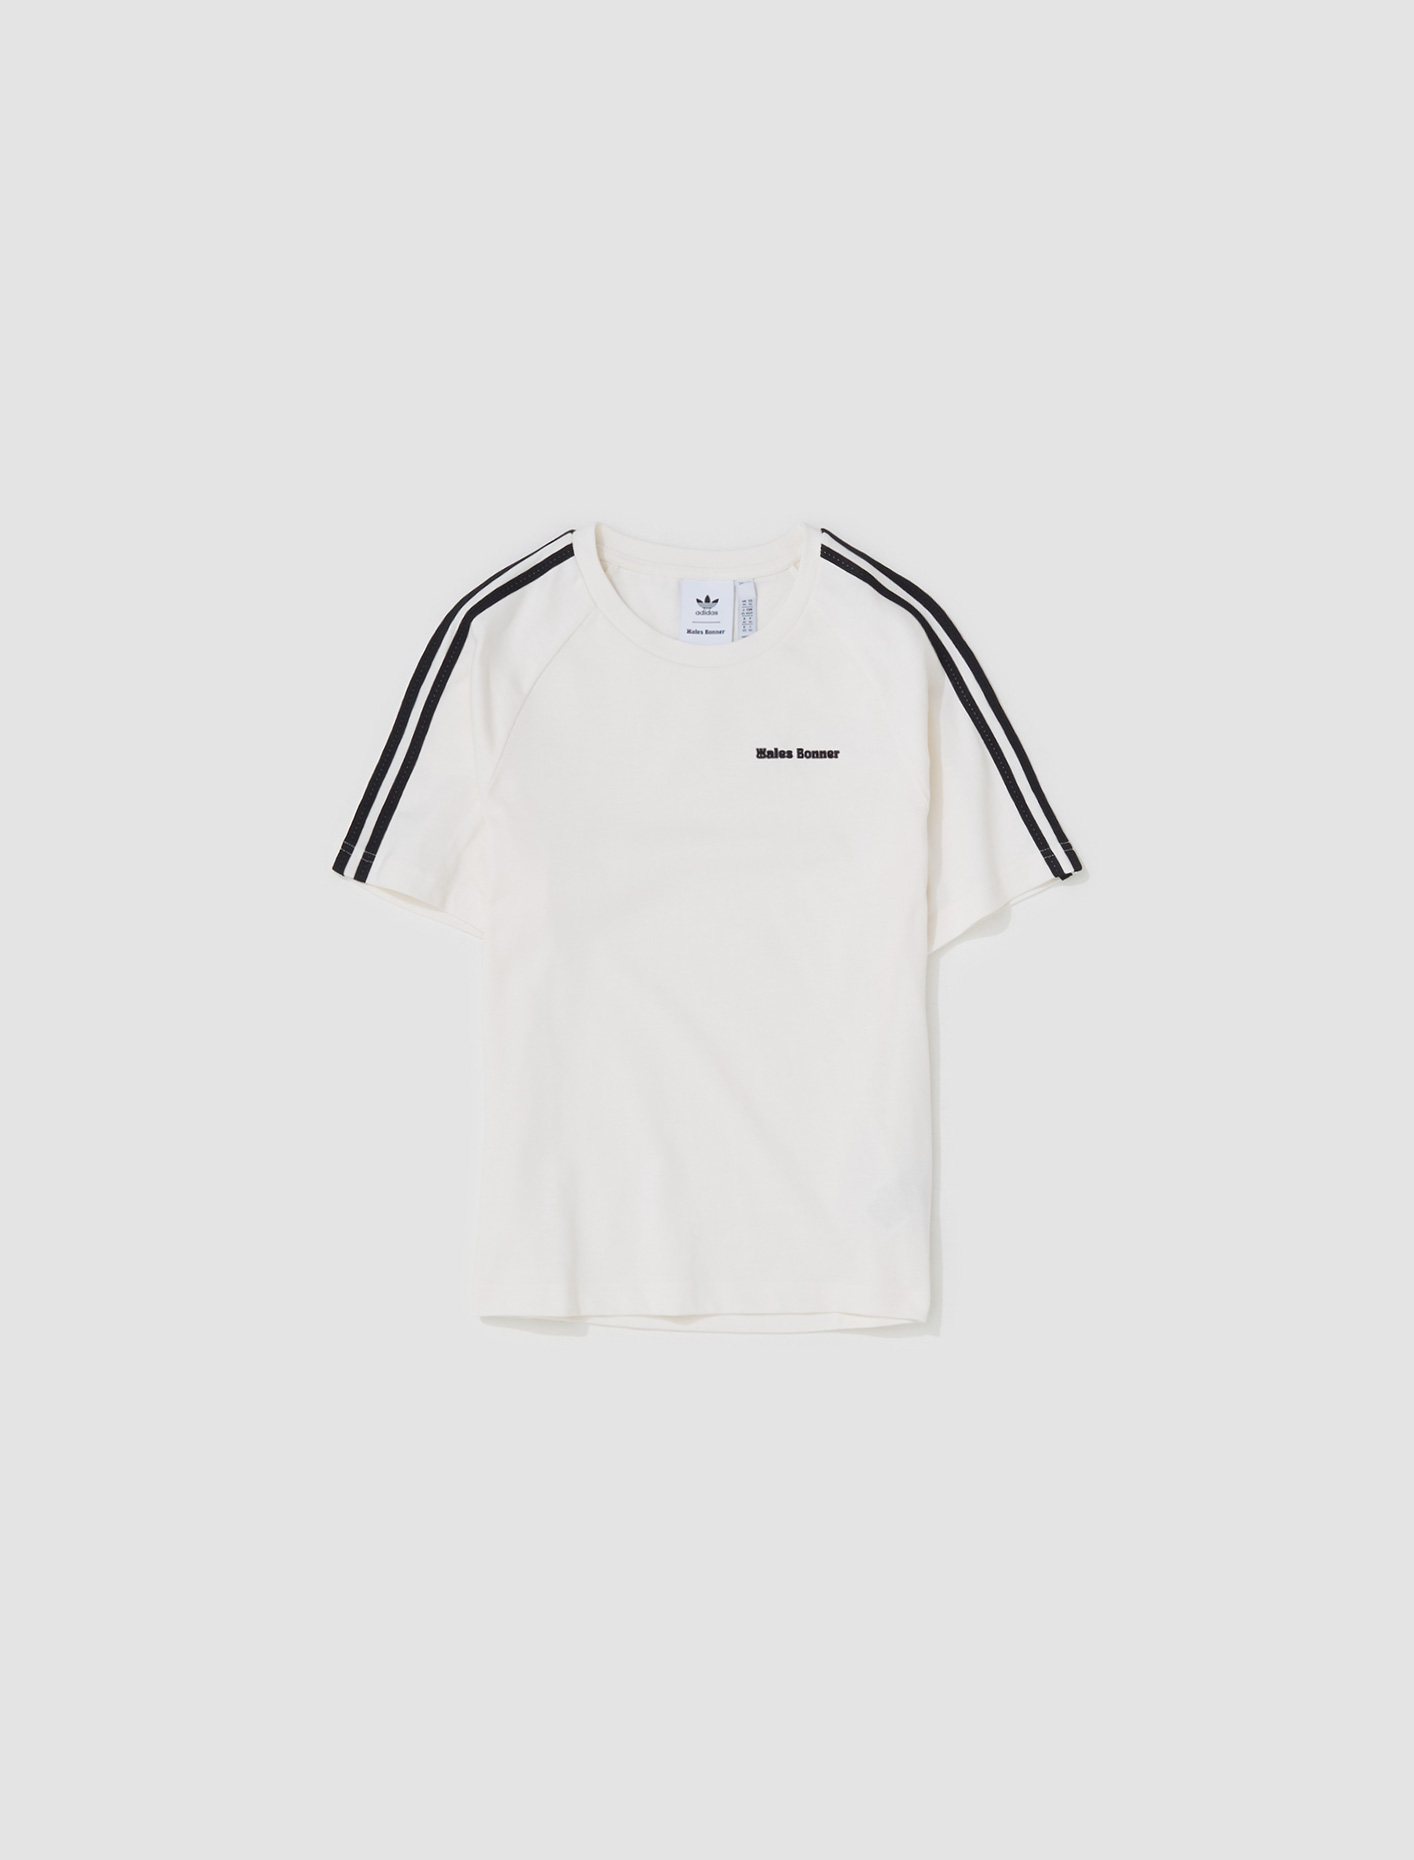 Adidas x Wales Bonner T-Shirt in White | Voo Store Berlin | Worldwide  Shipping